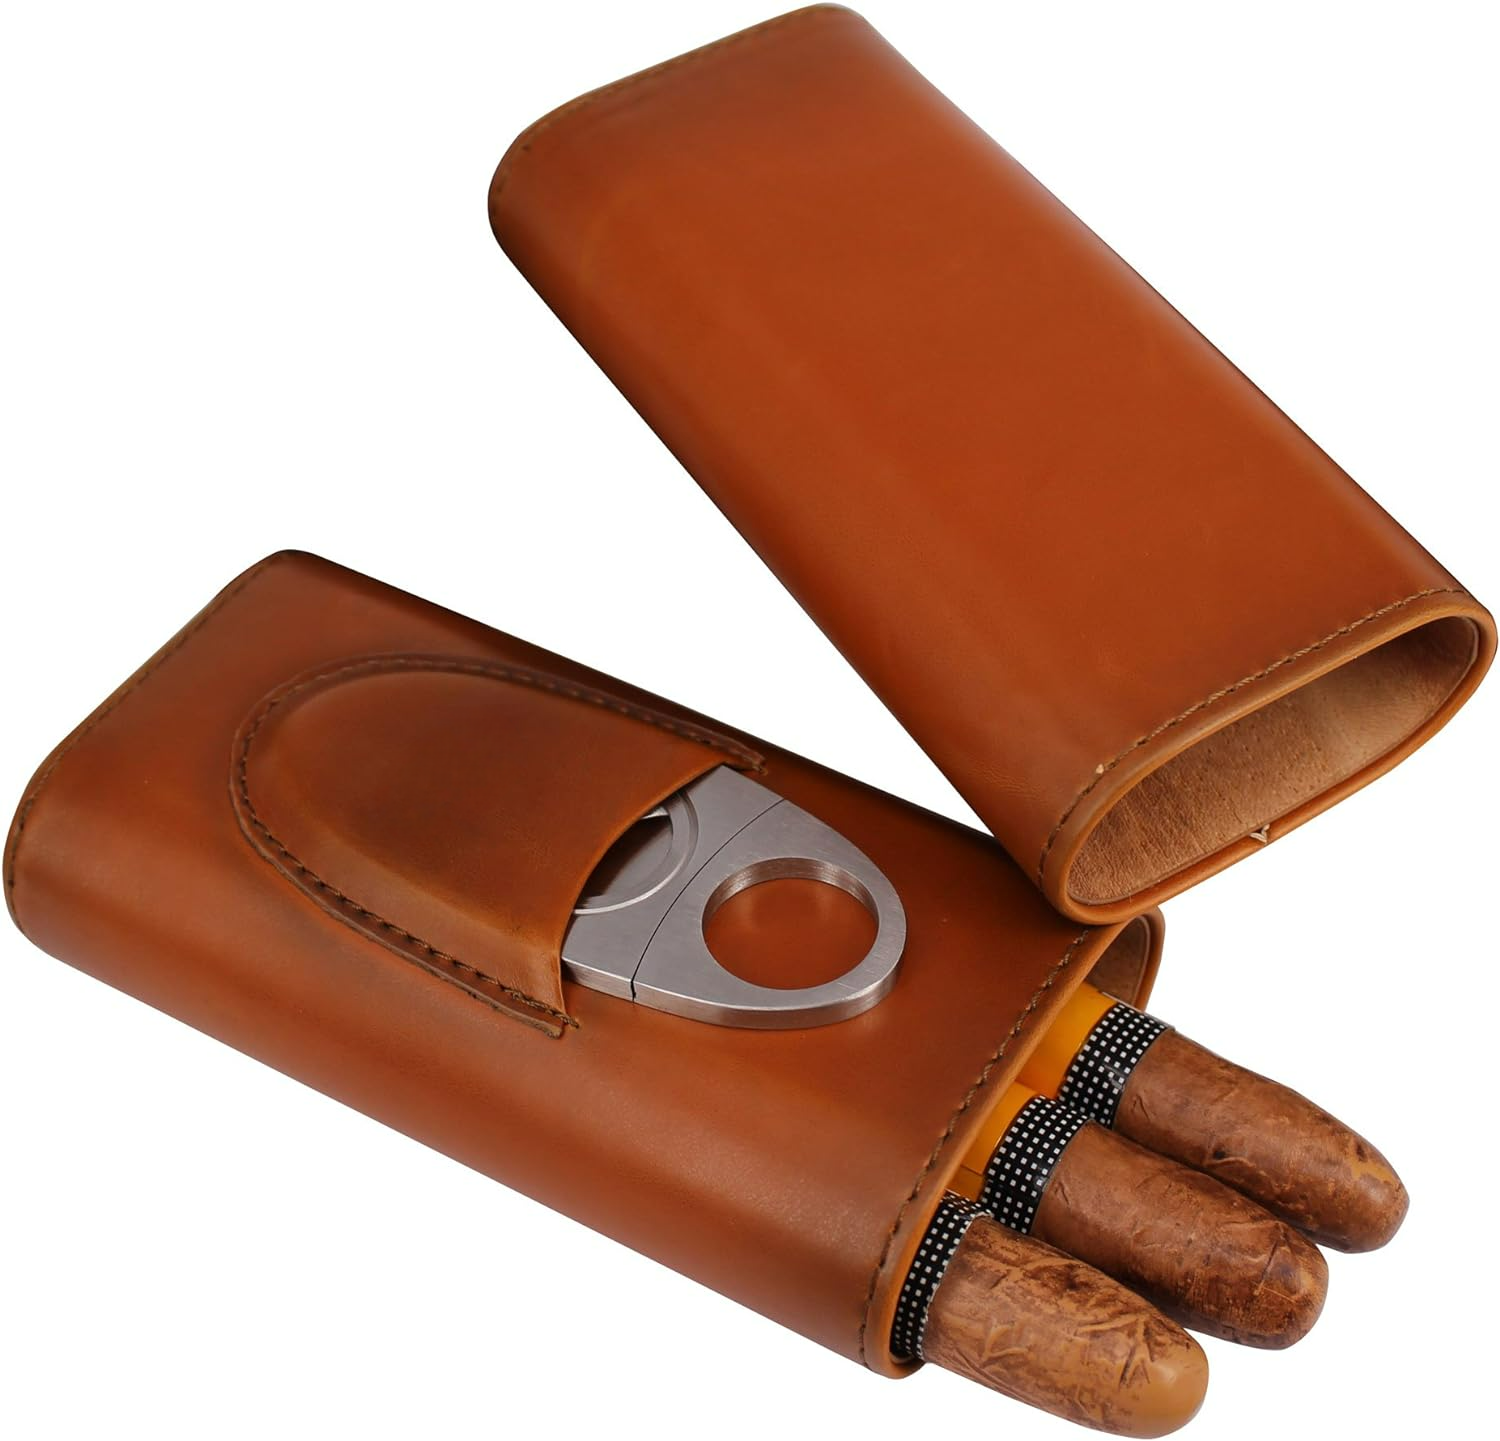 Avo 2 Cigar Ostrich Leather Case